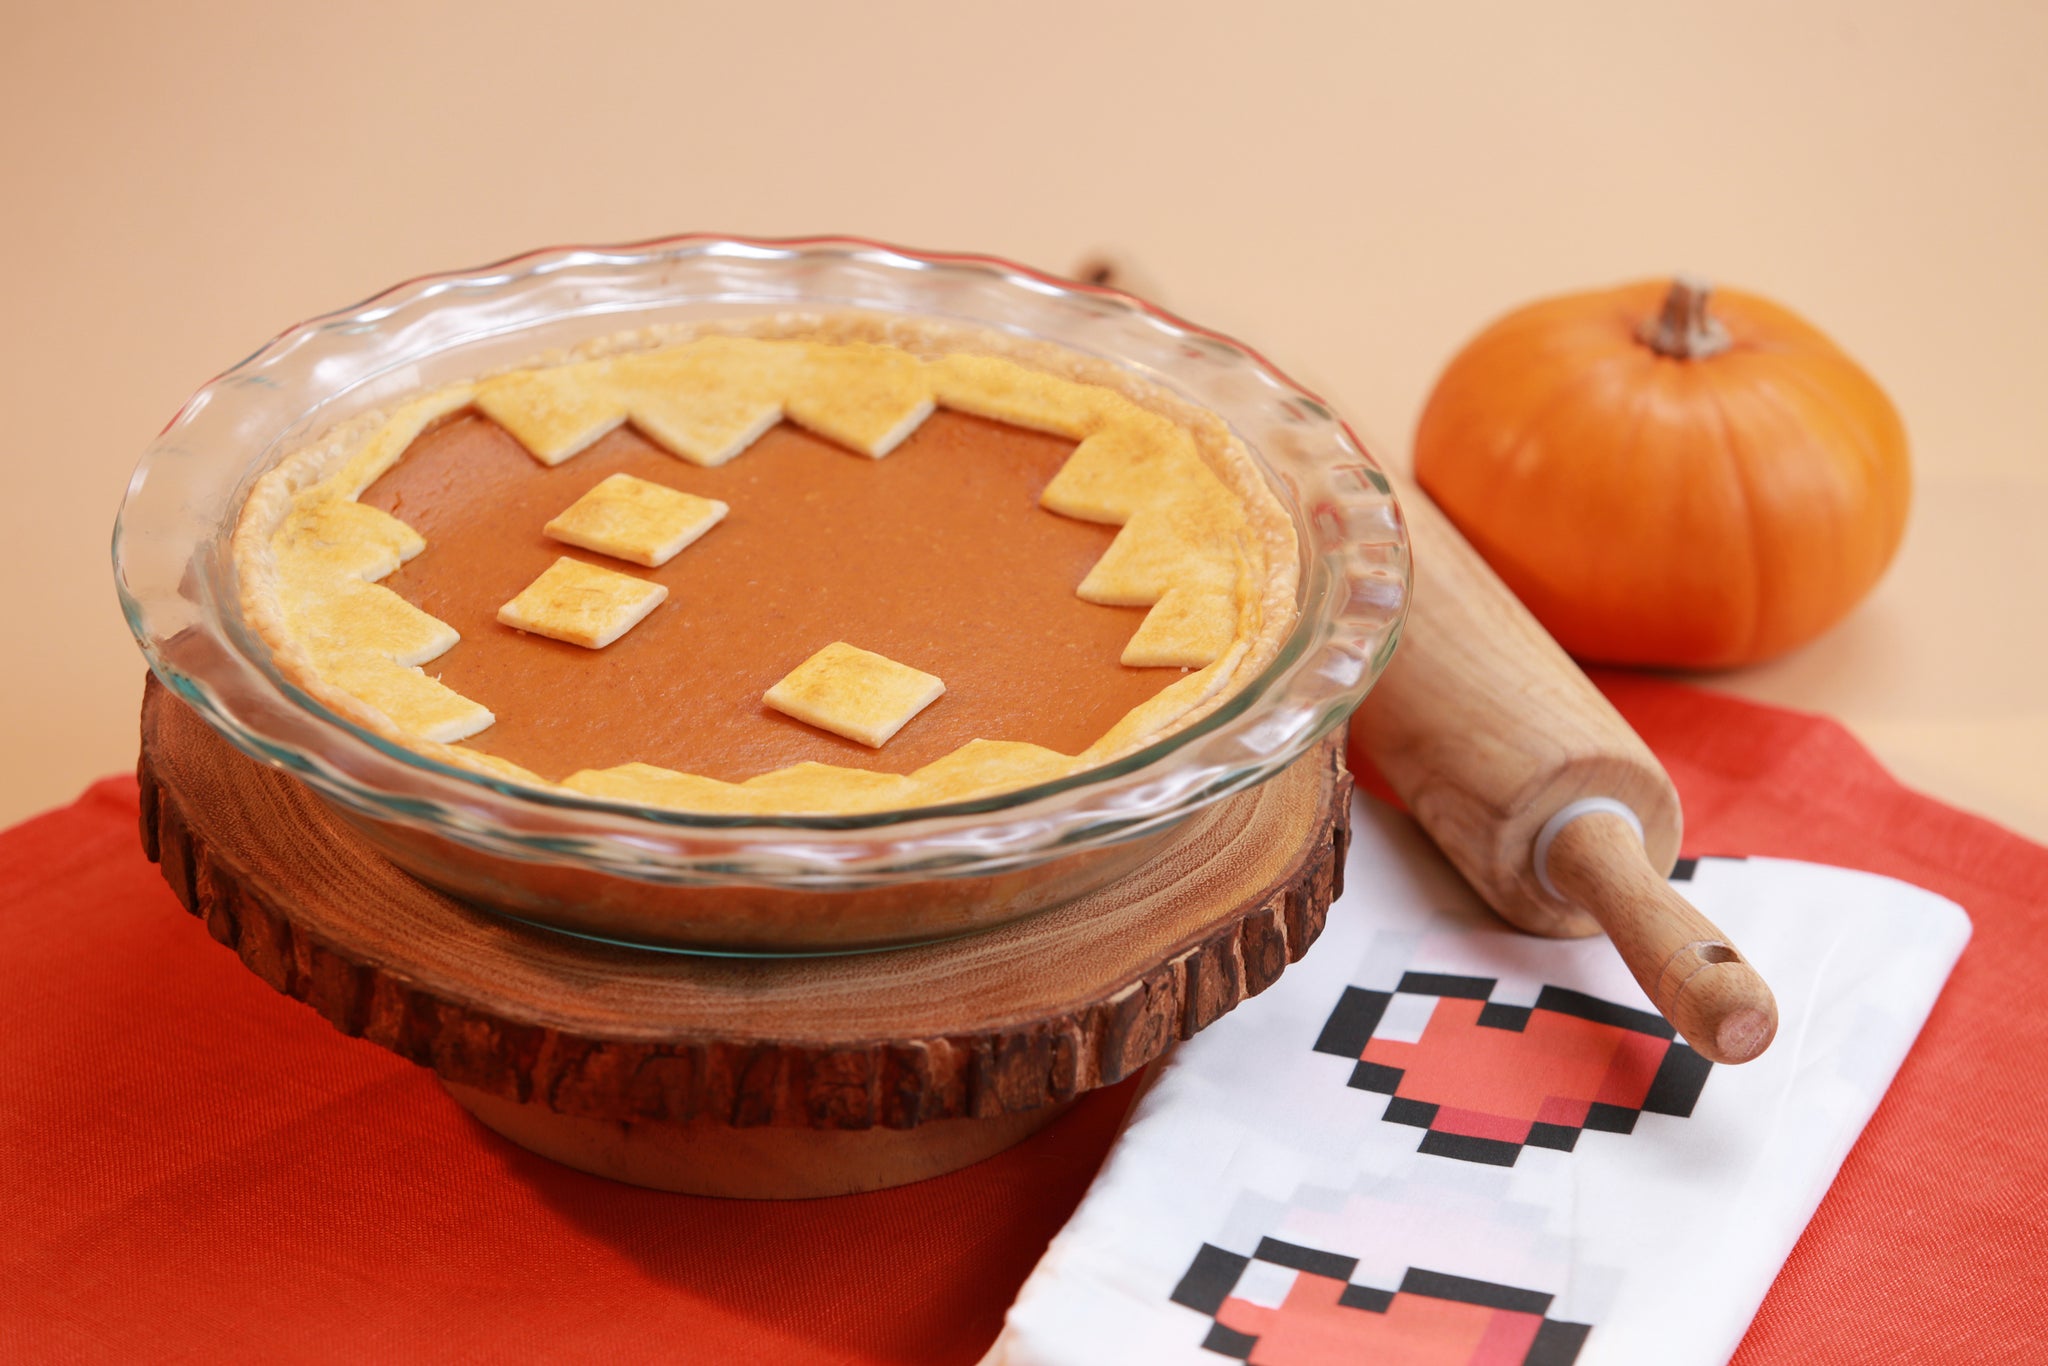 Minecraft Pumpkin Pie - Rosanna Pansino